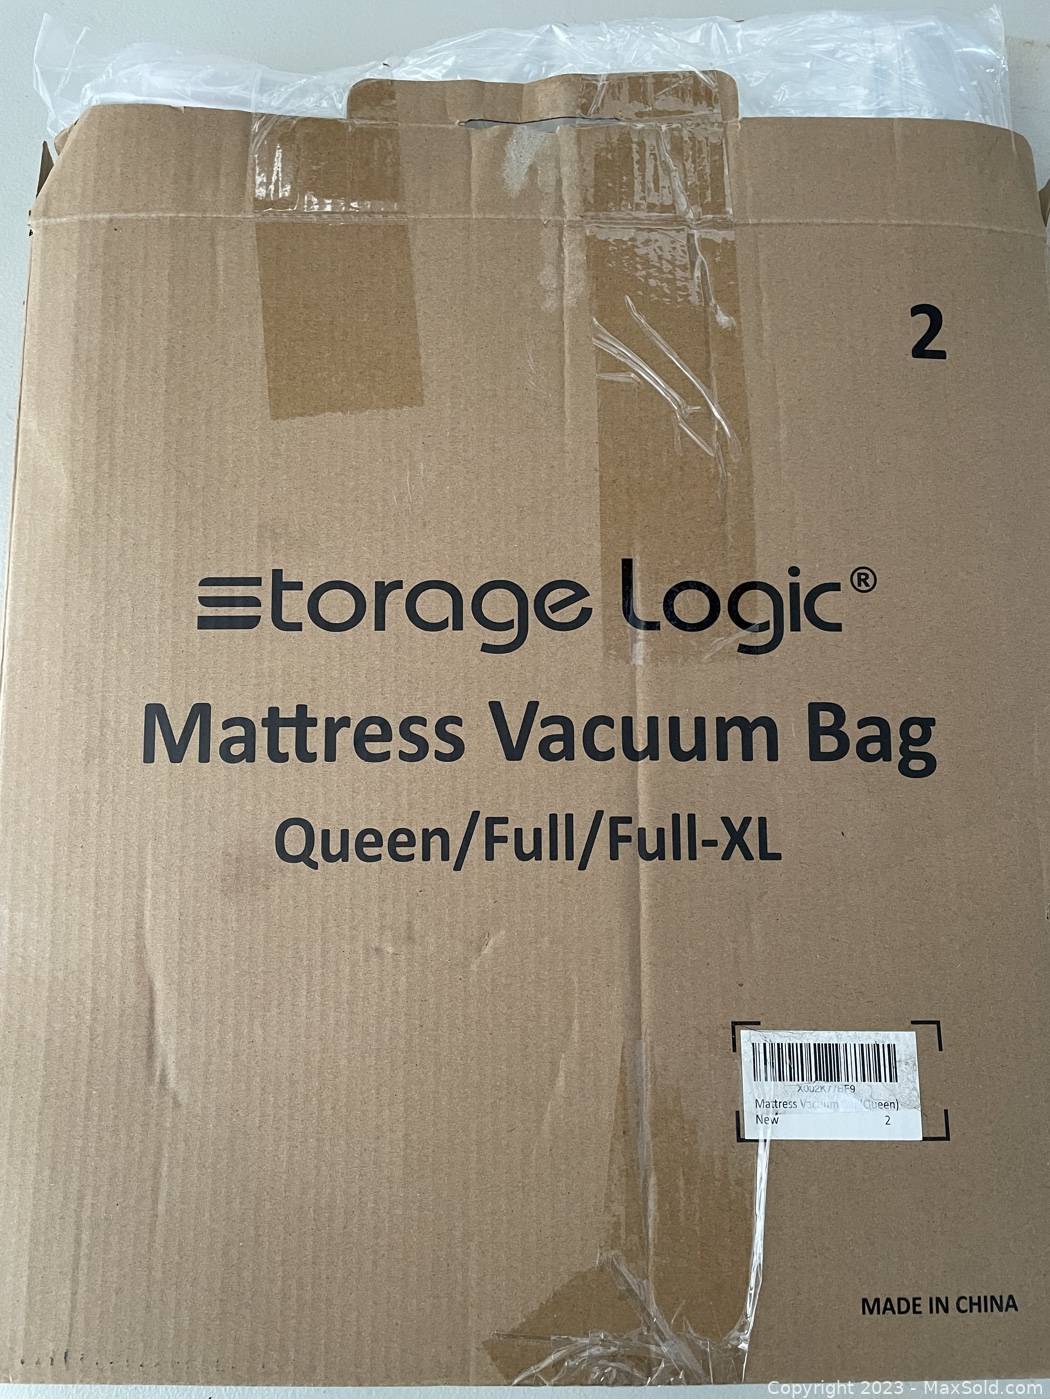 New In The Box Storage Logic Mattress Vacuum Bag Queen/Full/Full XL Sealed